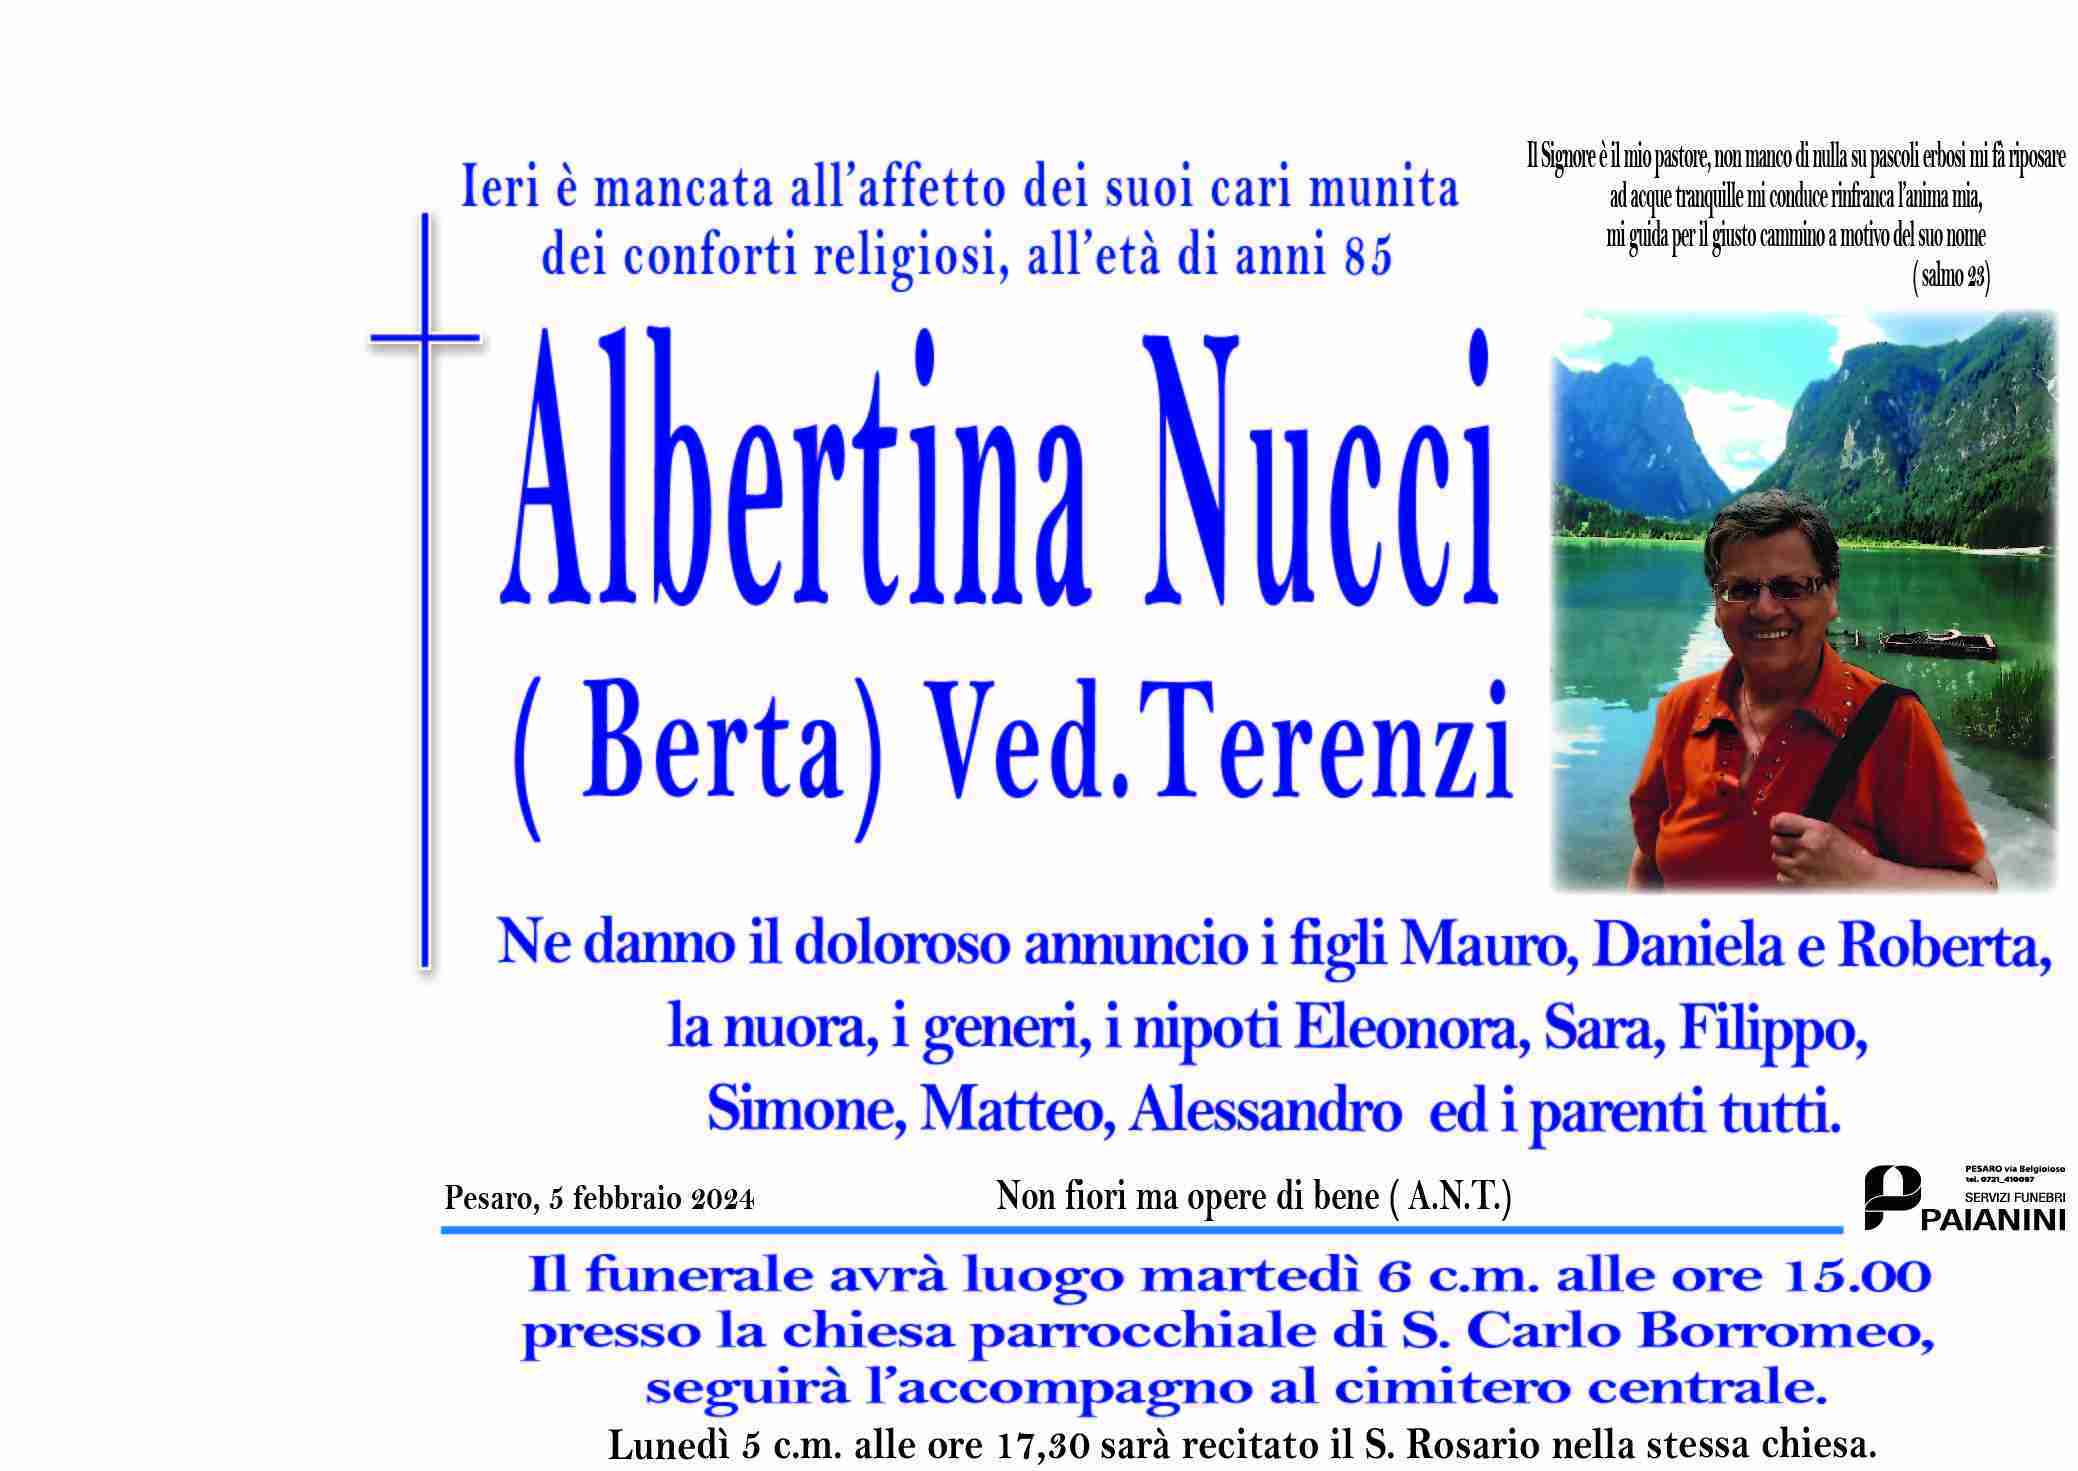 Albertina nucci